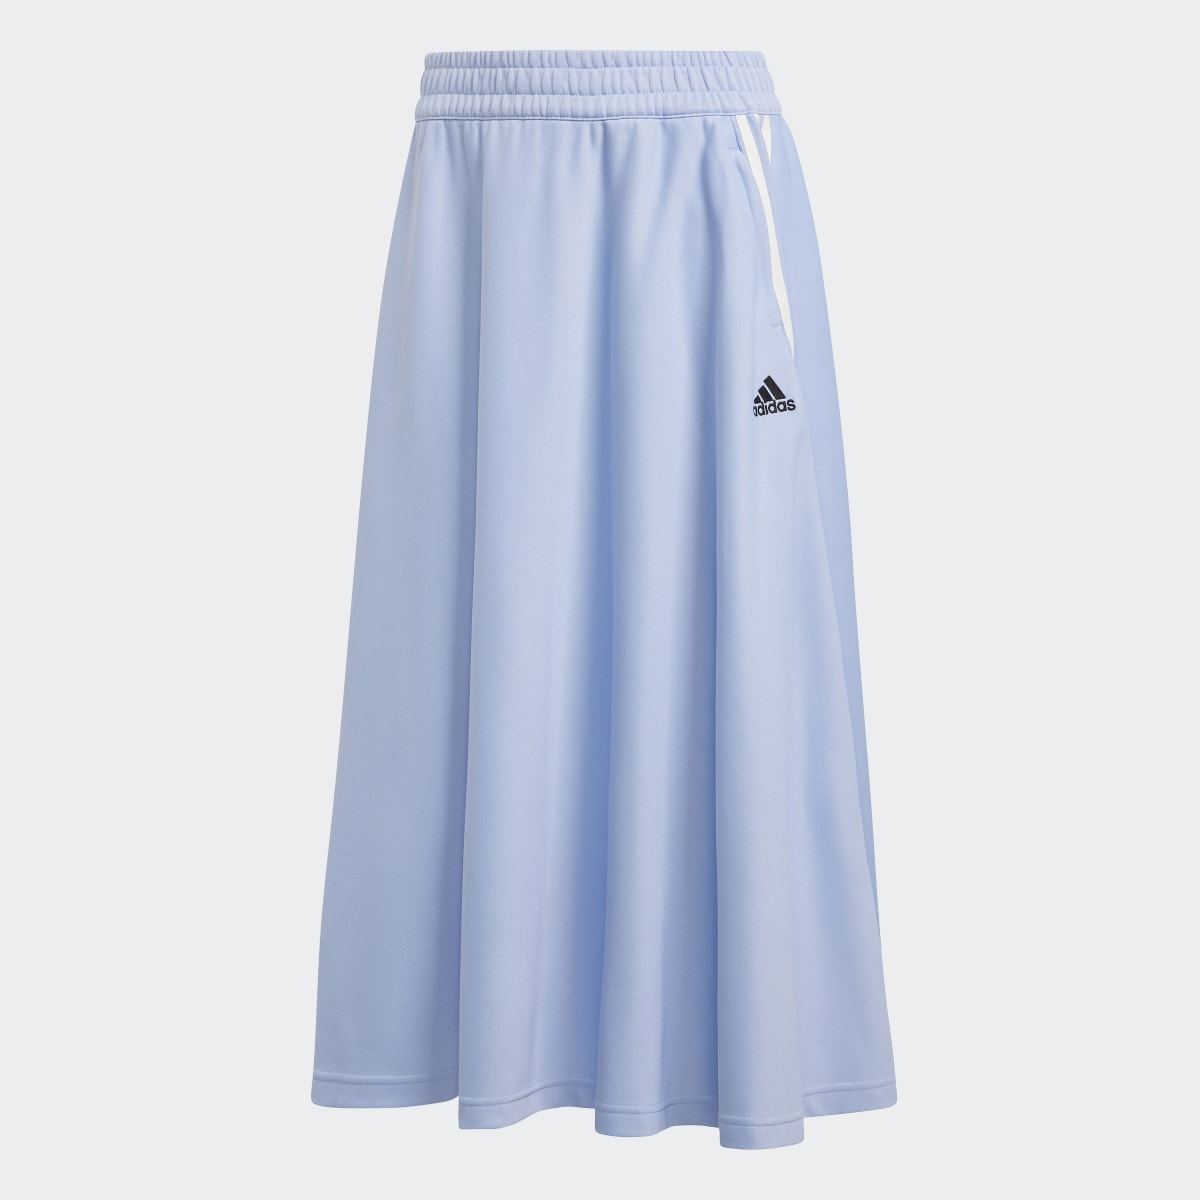 Adidas Track Skirt. 4